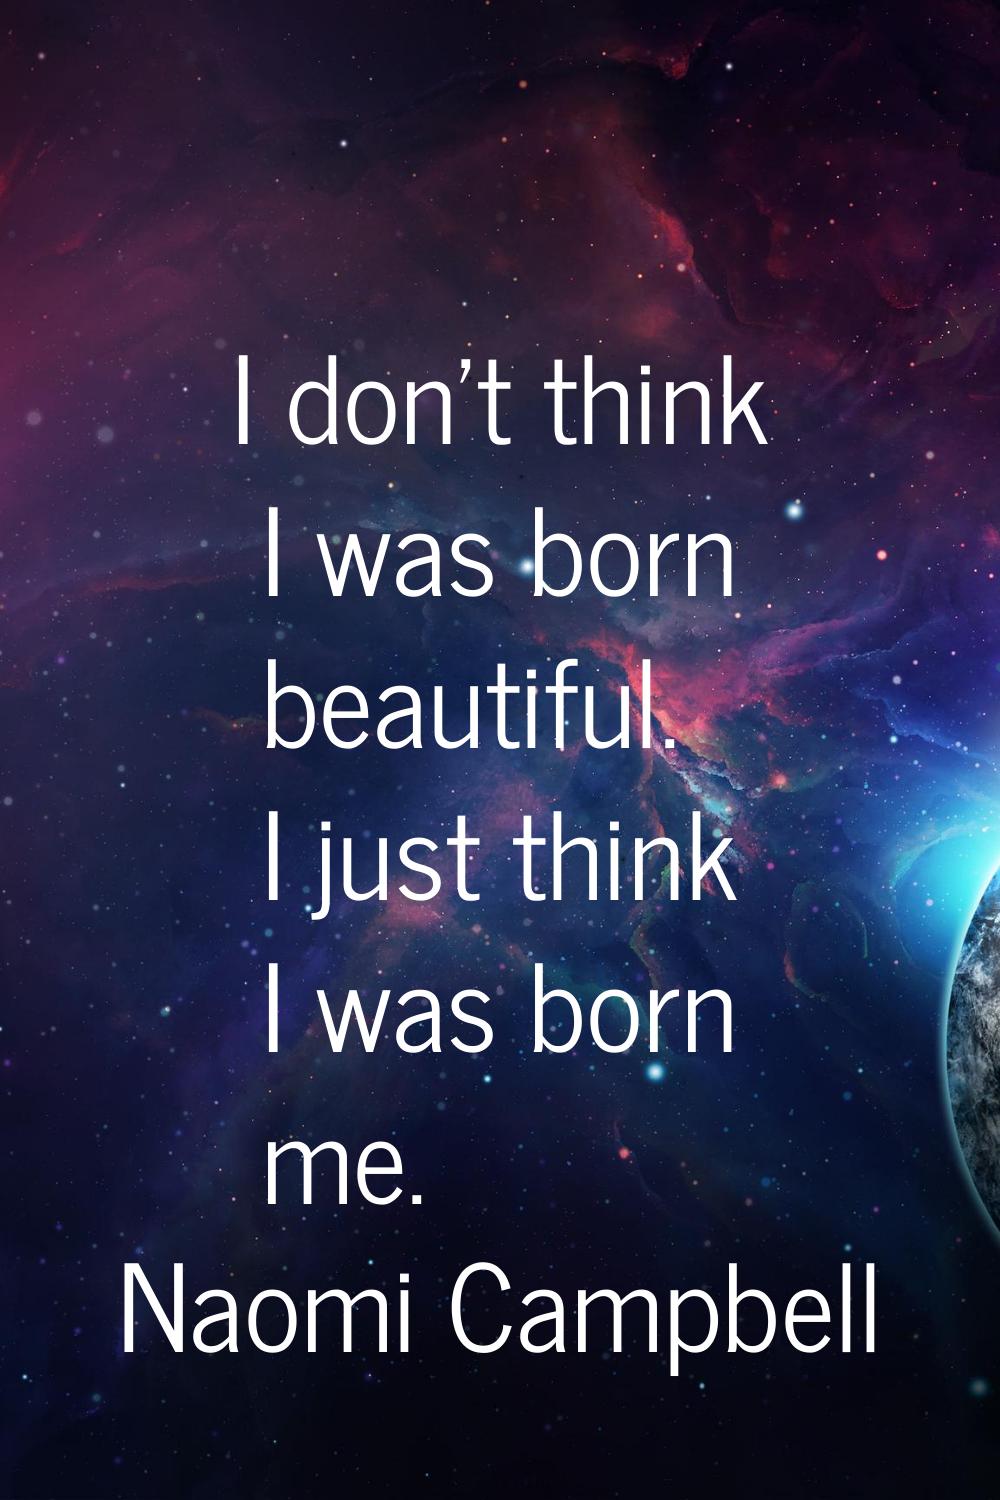 I don't think I was born beautiful. I just think I was born me.